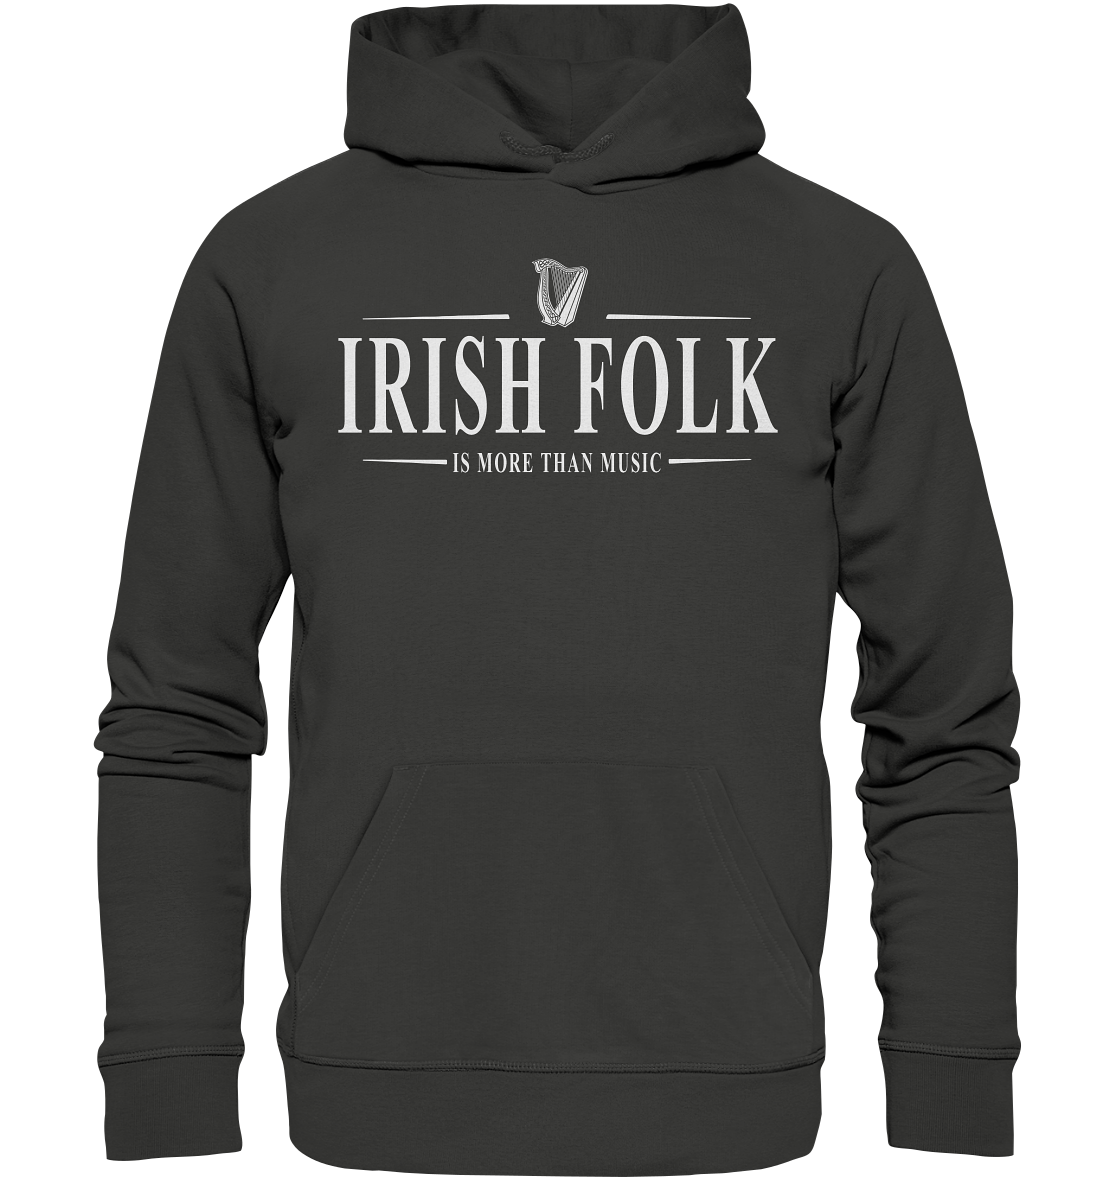 Irish Folk "Is More Than Music" - Premium Unisex Hoodie